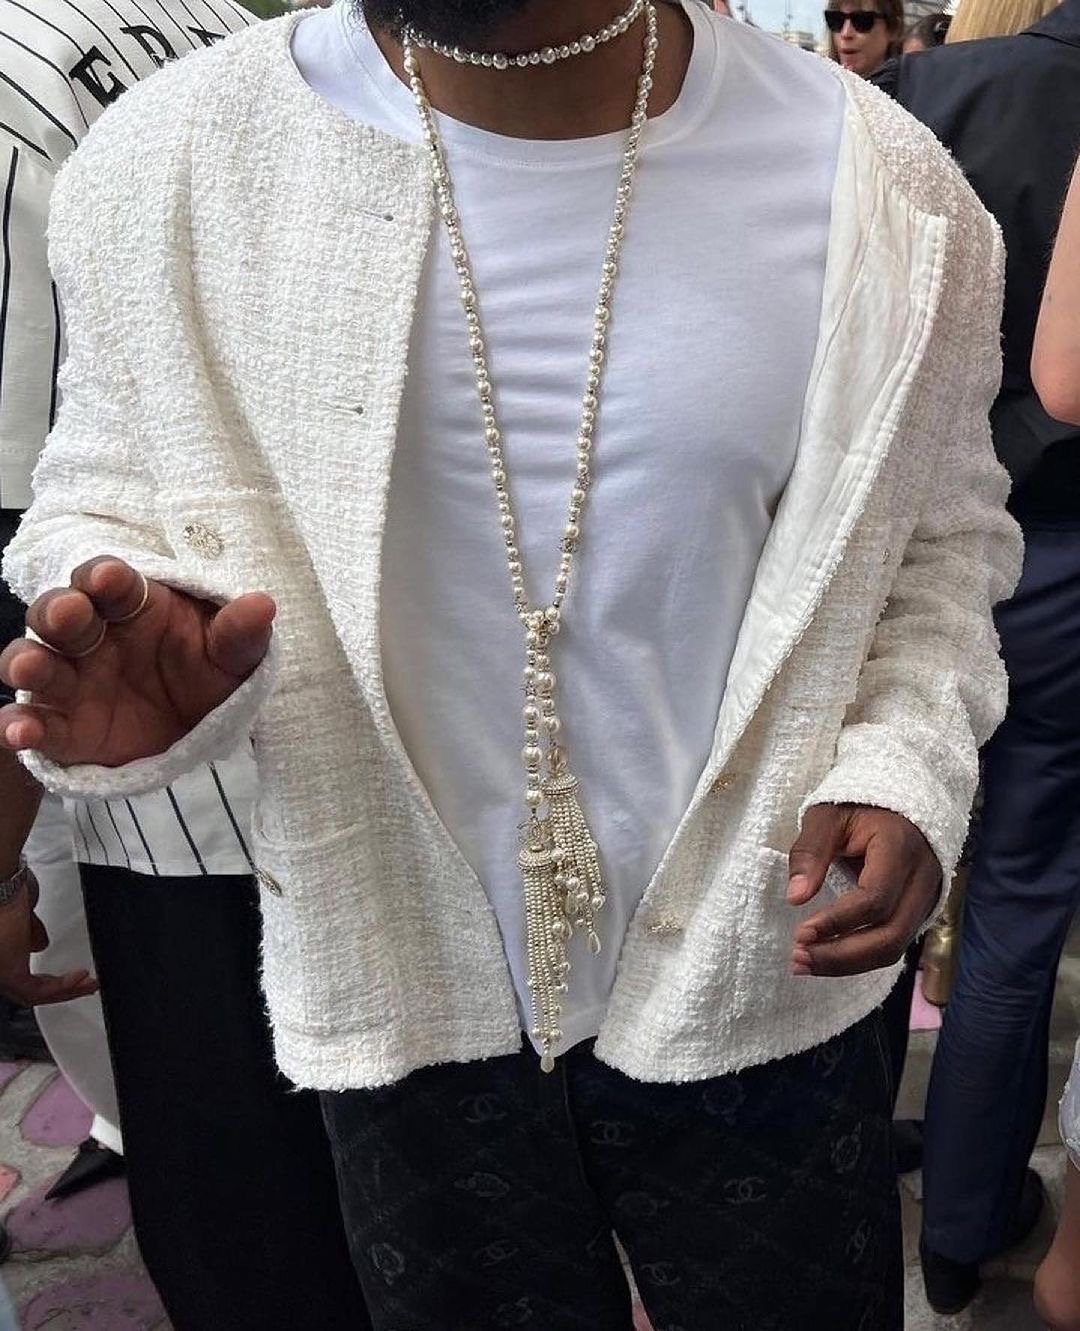 Kendrick Lamar Attends Chanel Fashion Show In Paris